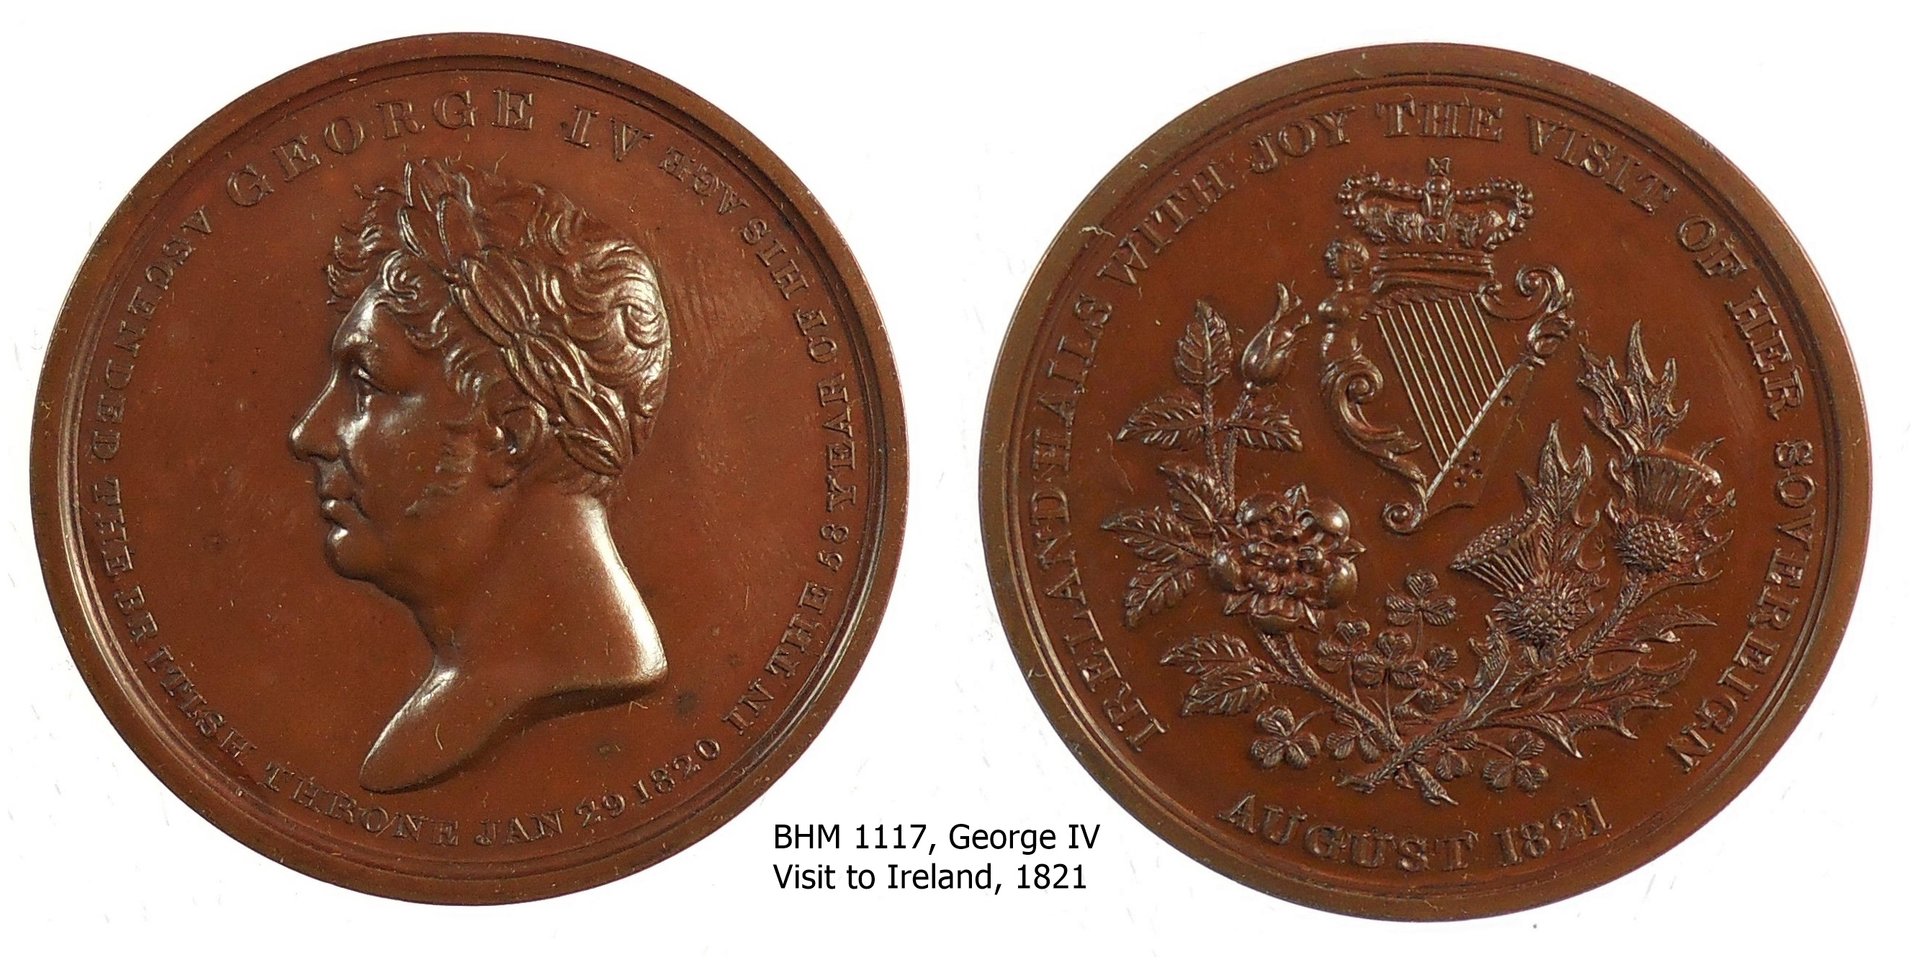 George IV visits Ireland b-horz script.jpg